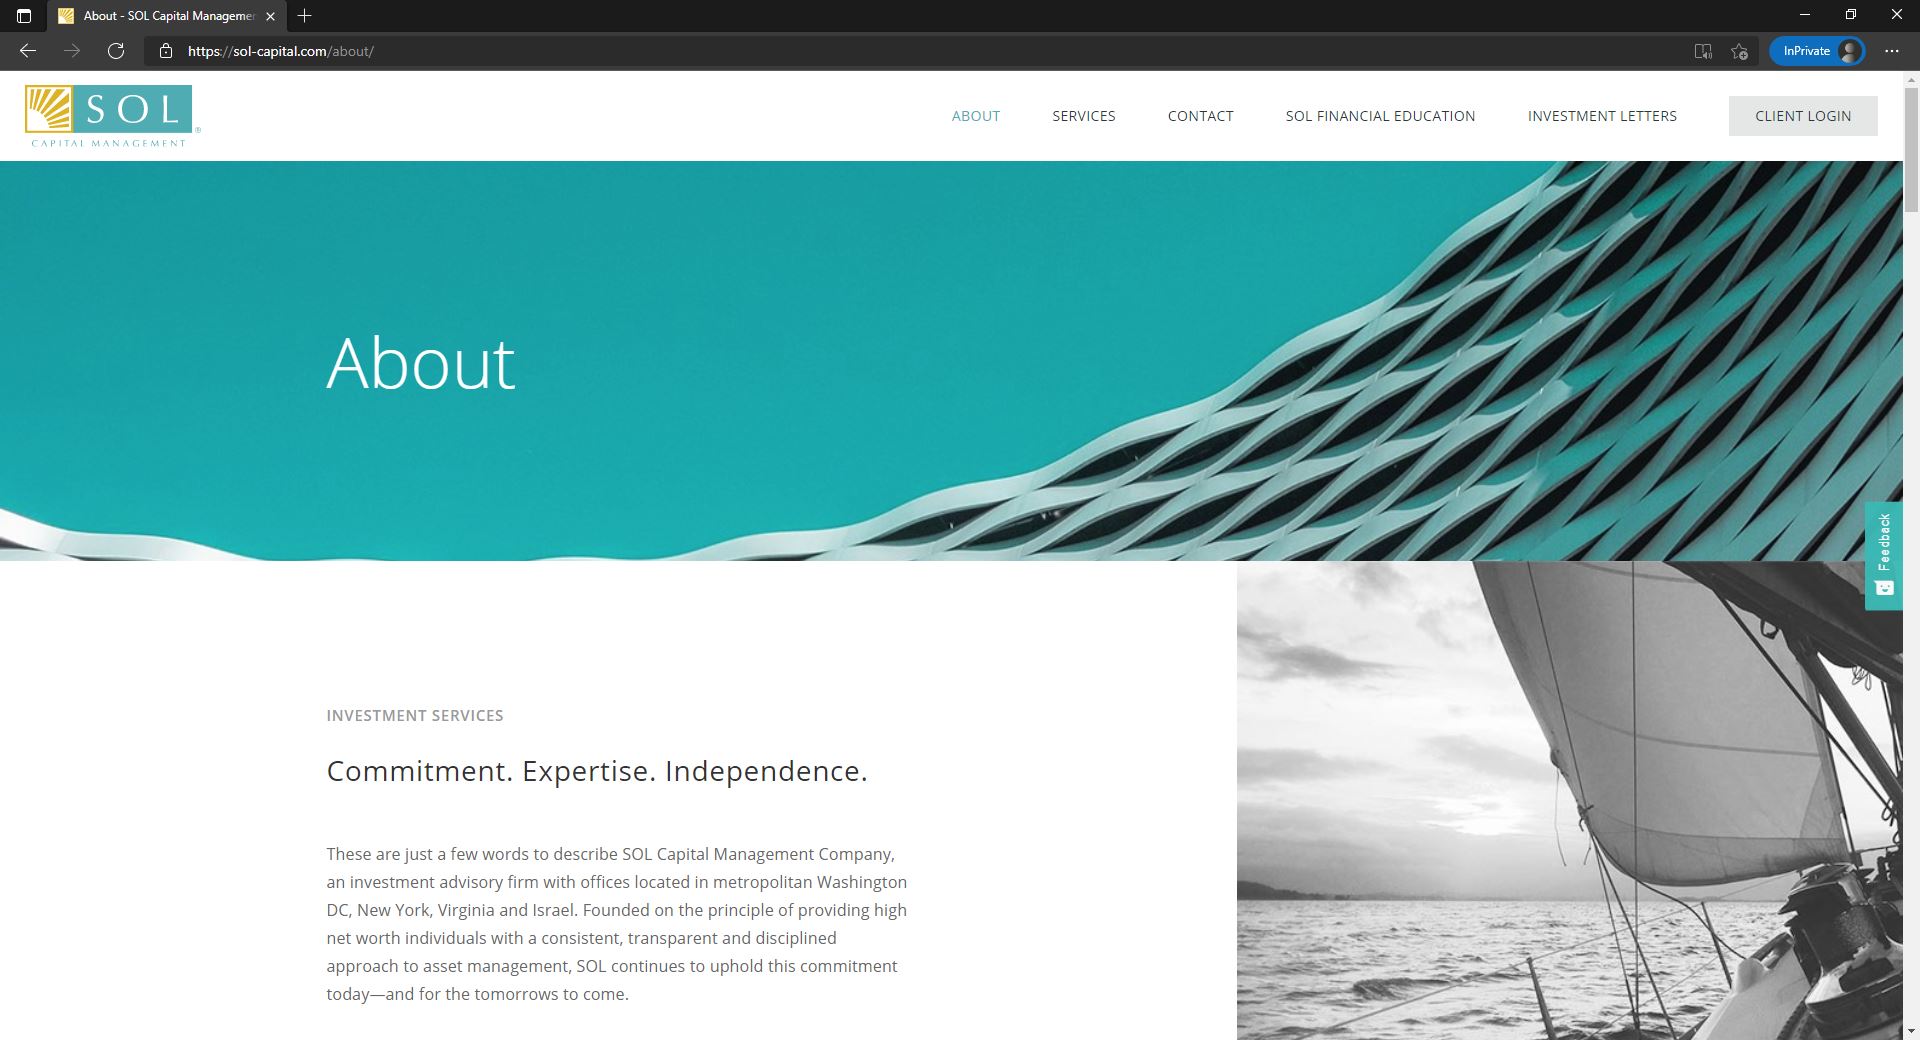 Sol Capital Management website